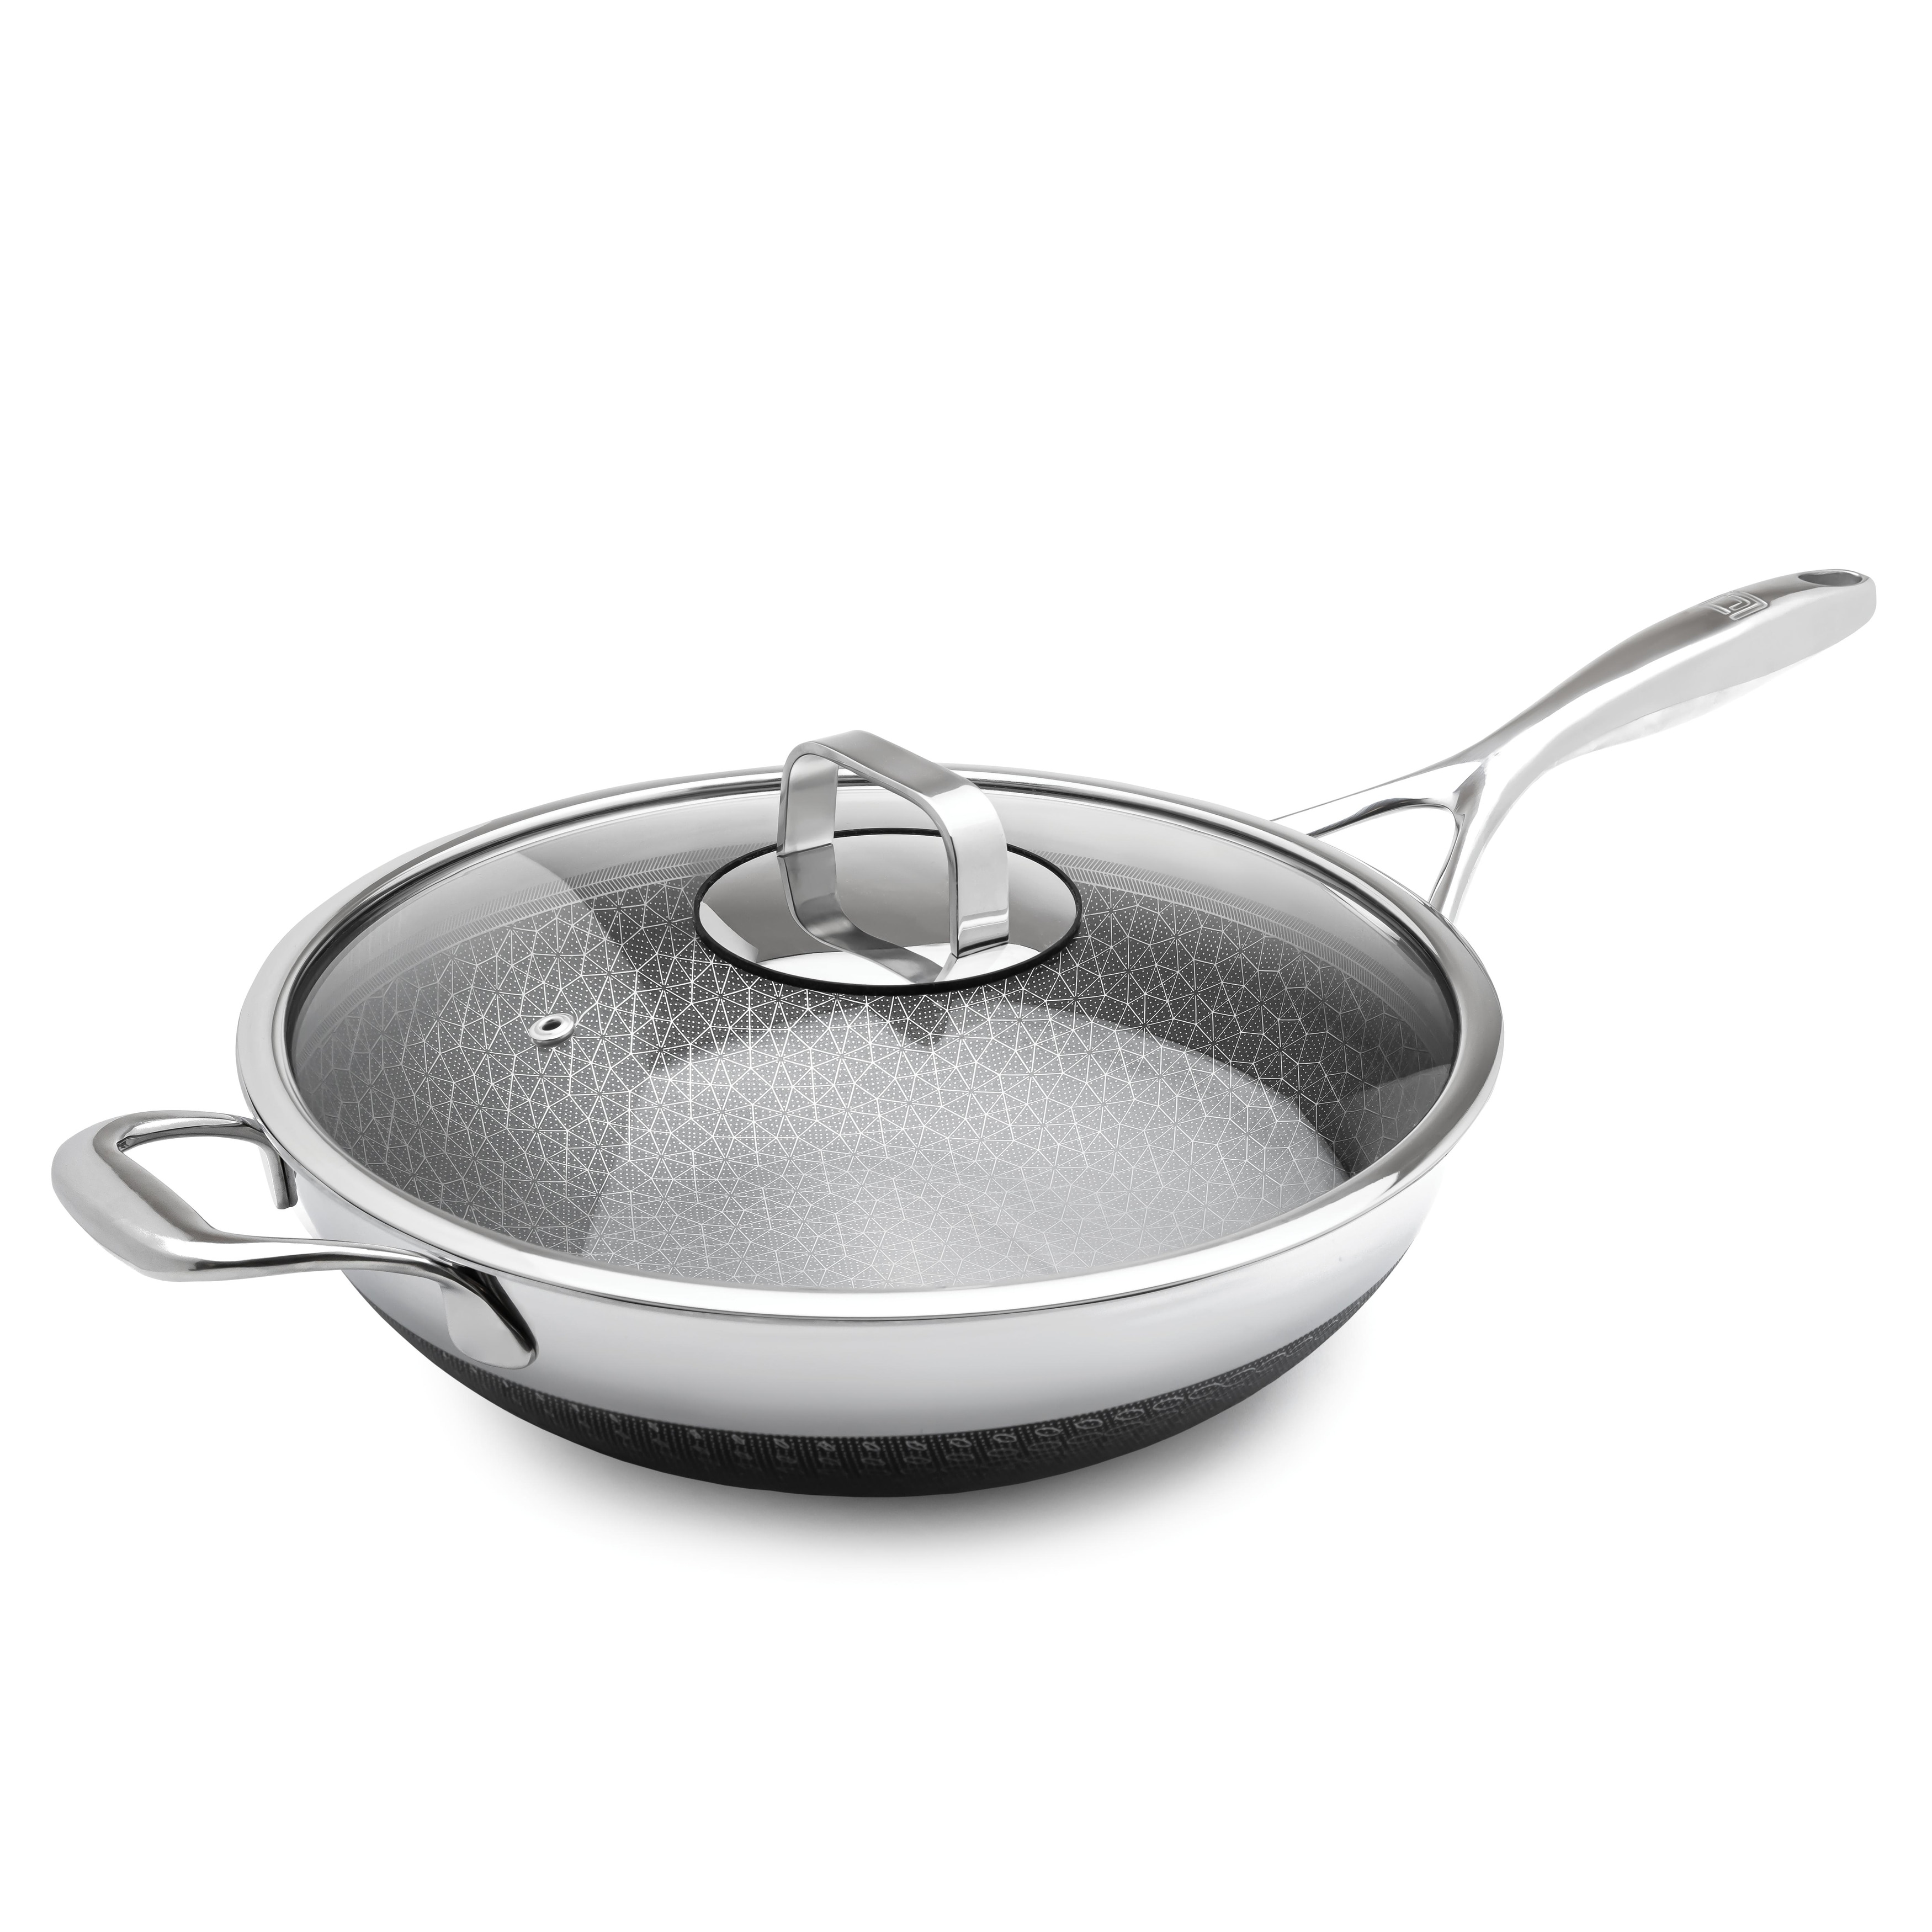 BERGNER 12 in. Stainless Steel Nonstick Stir Fry Pan with Lid